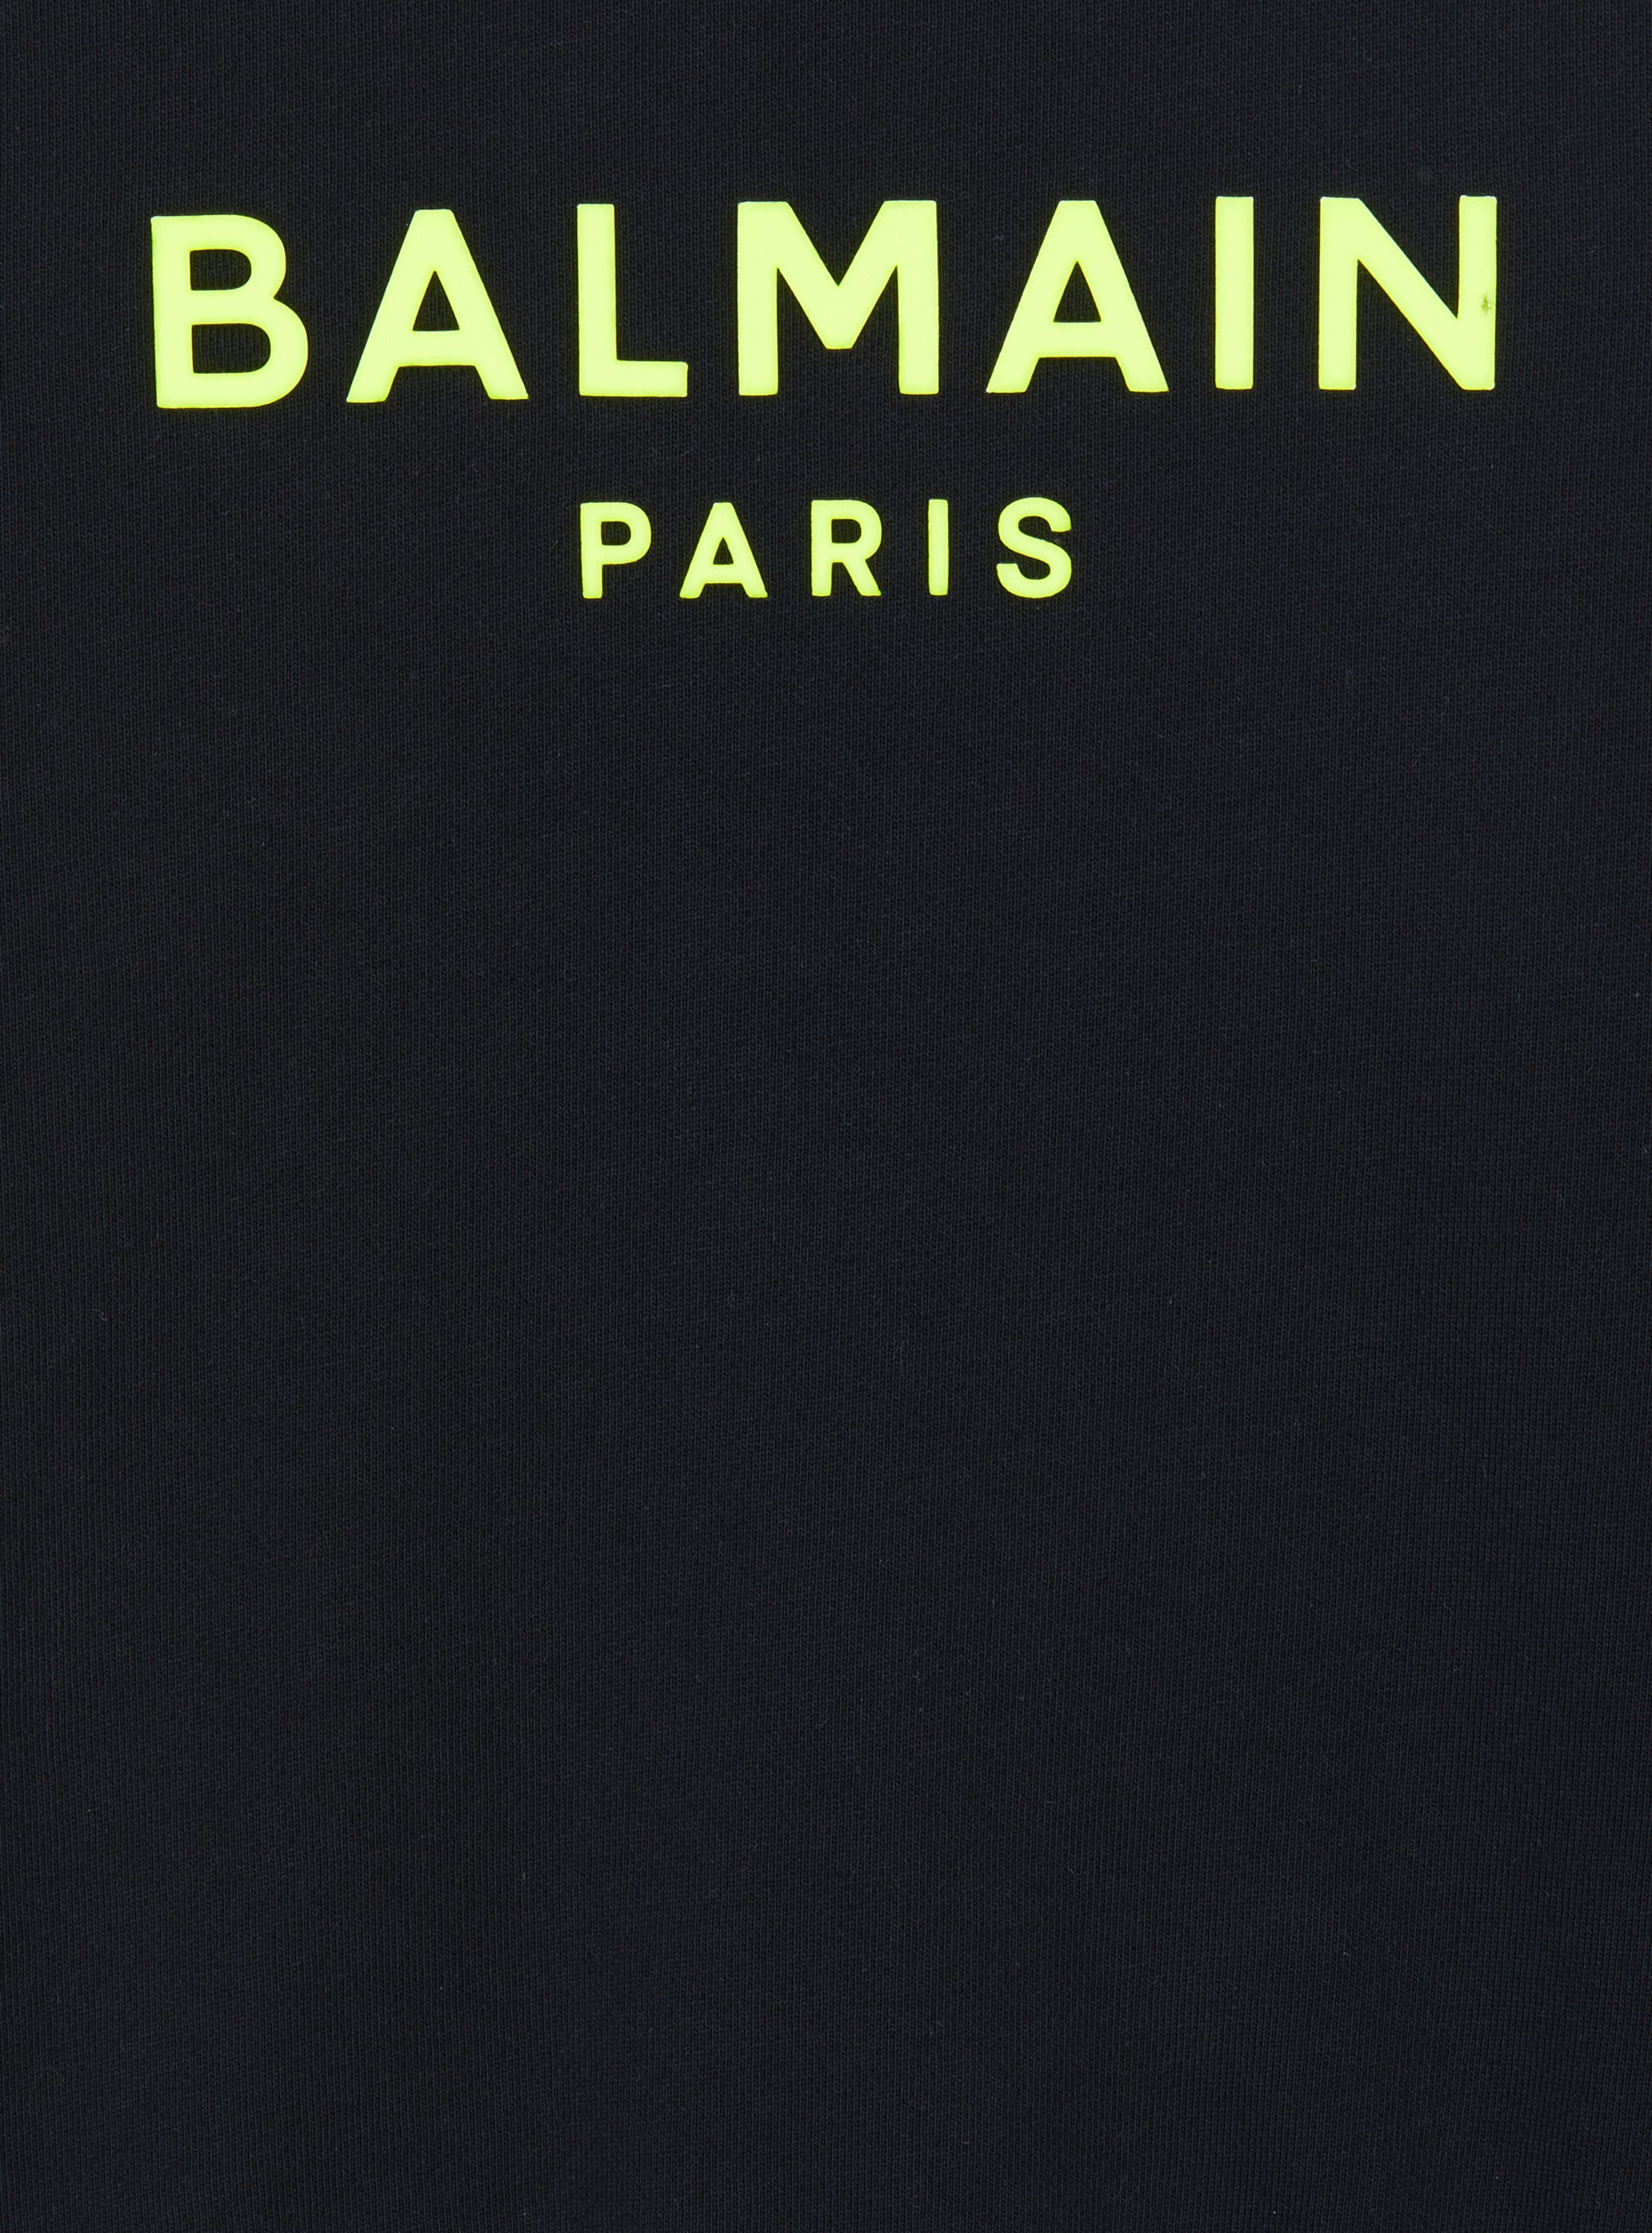 Balmain Paris スウェットシャツ